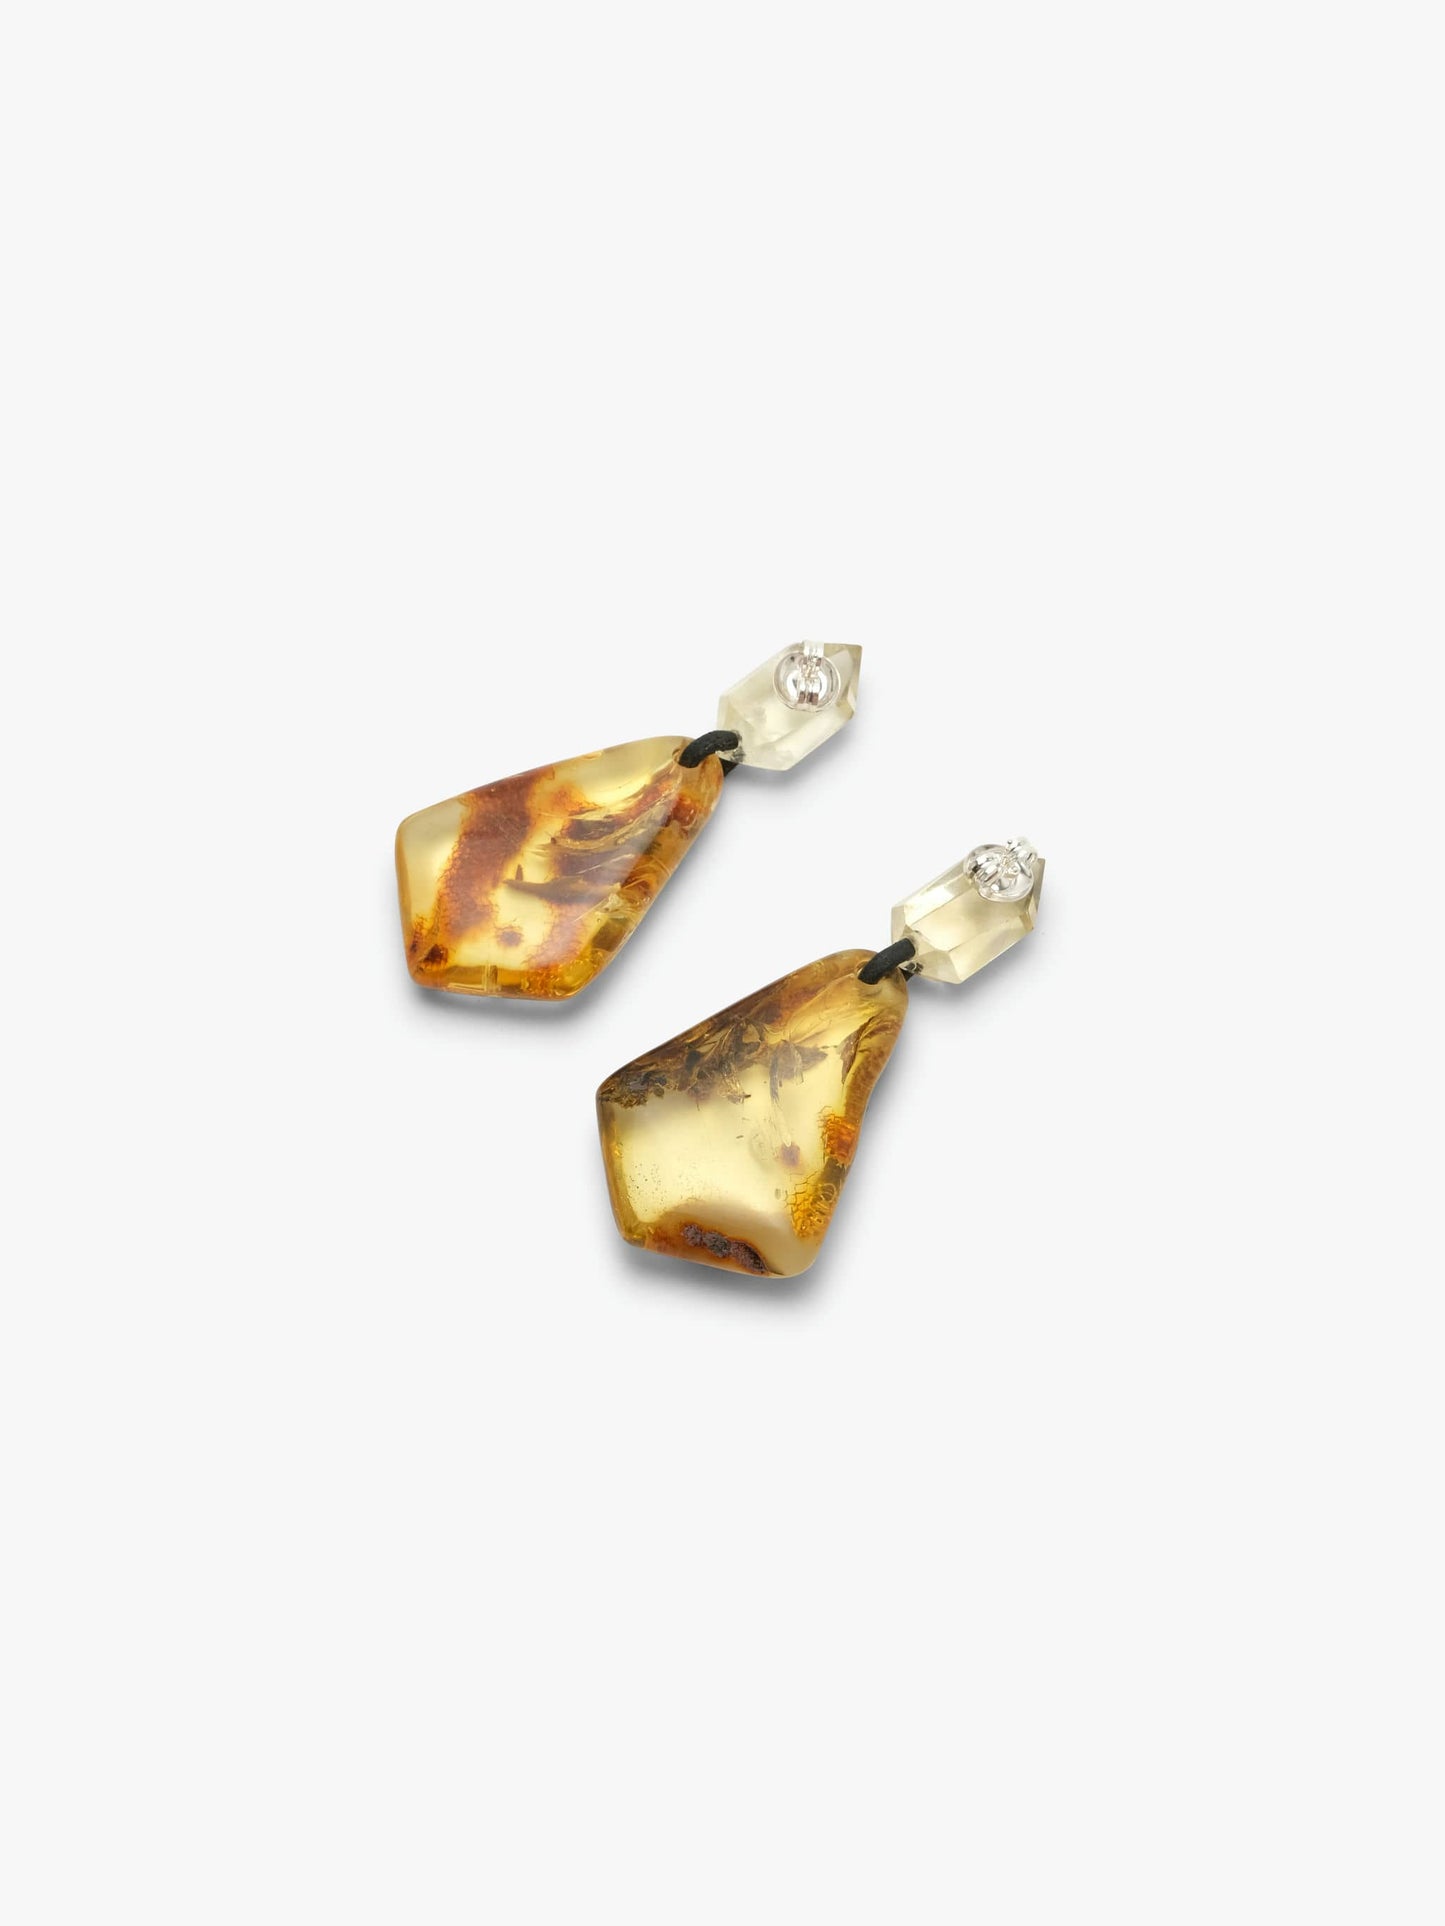 Stud earrings: citrine, amber